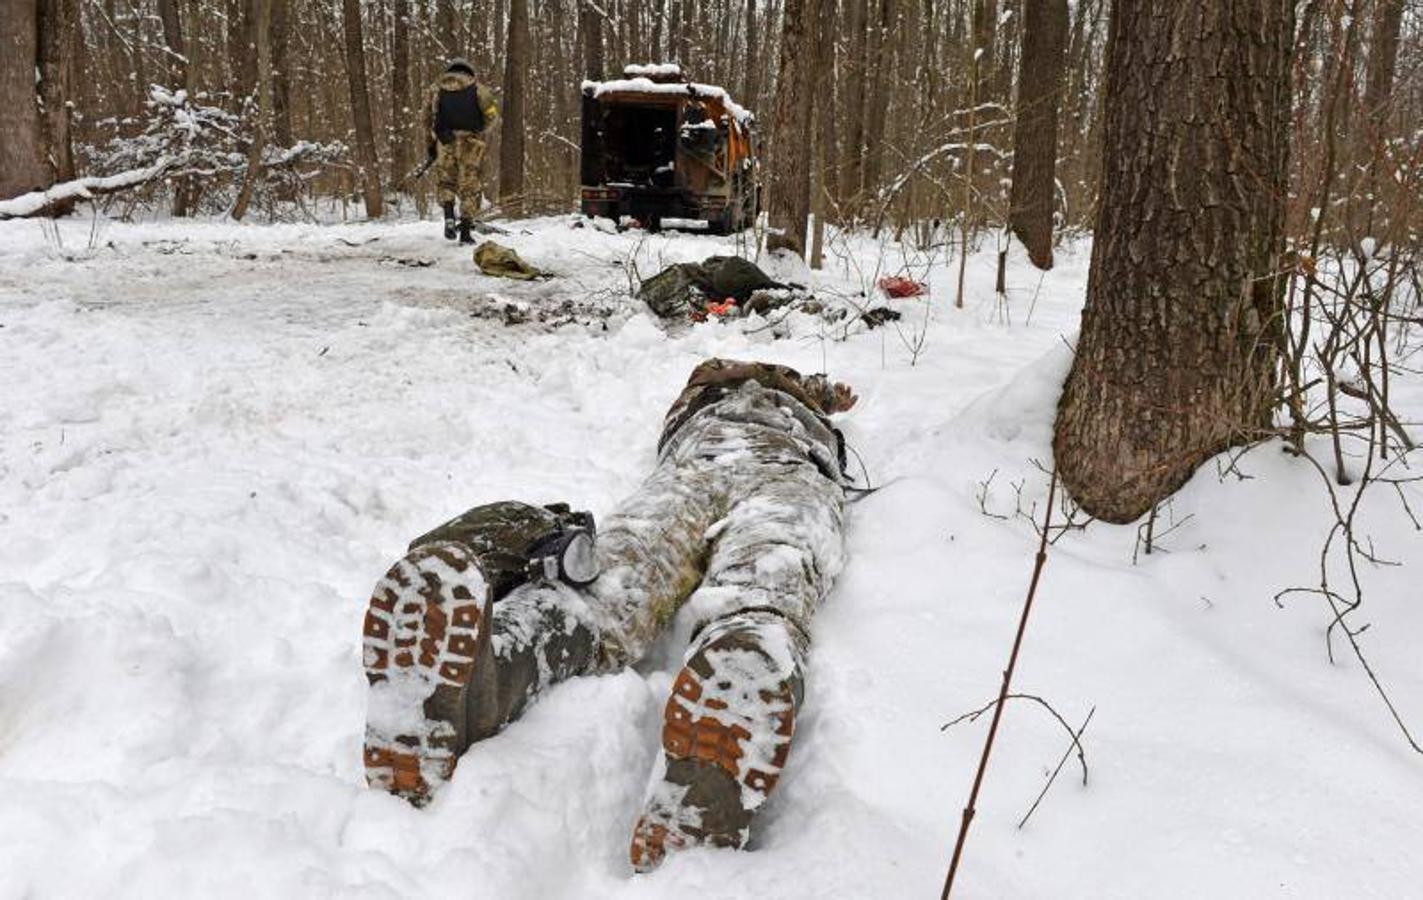 Cadáver de un militar ruso cerca de un vehículo militar destruido en un bosque en las afueras de Kharkiv.